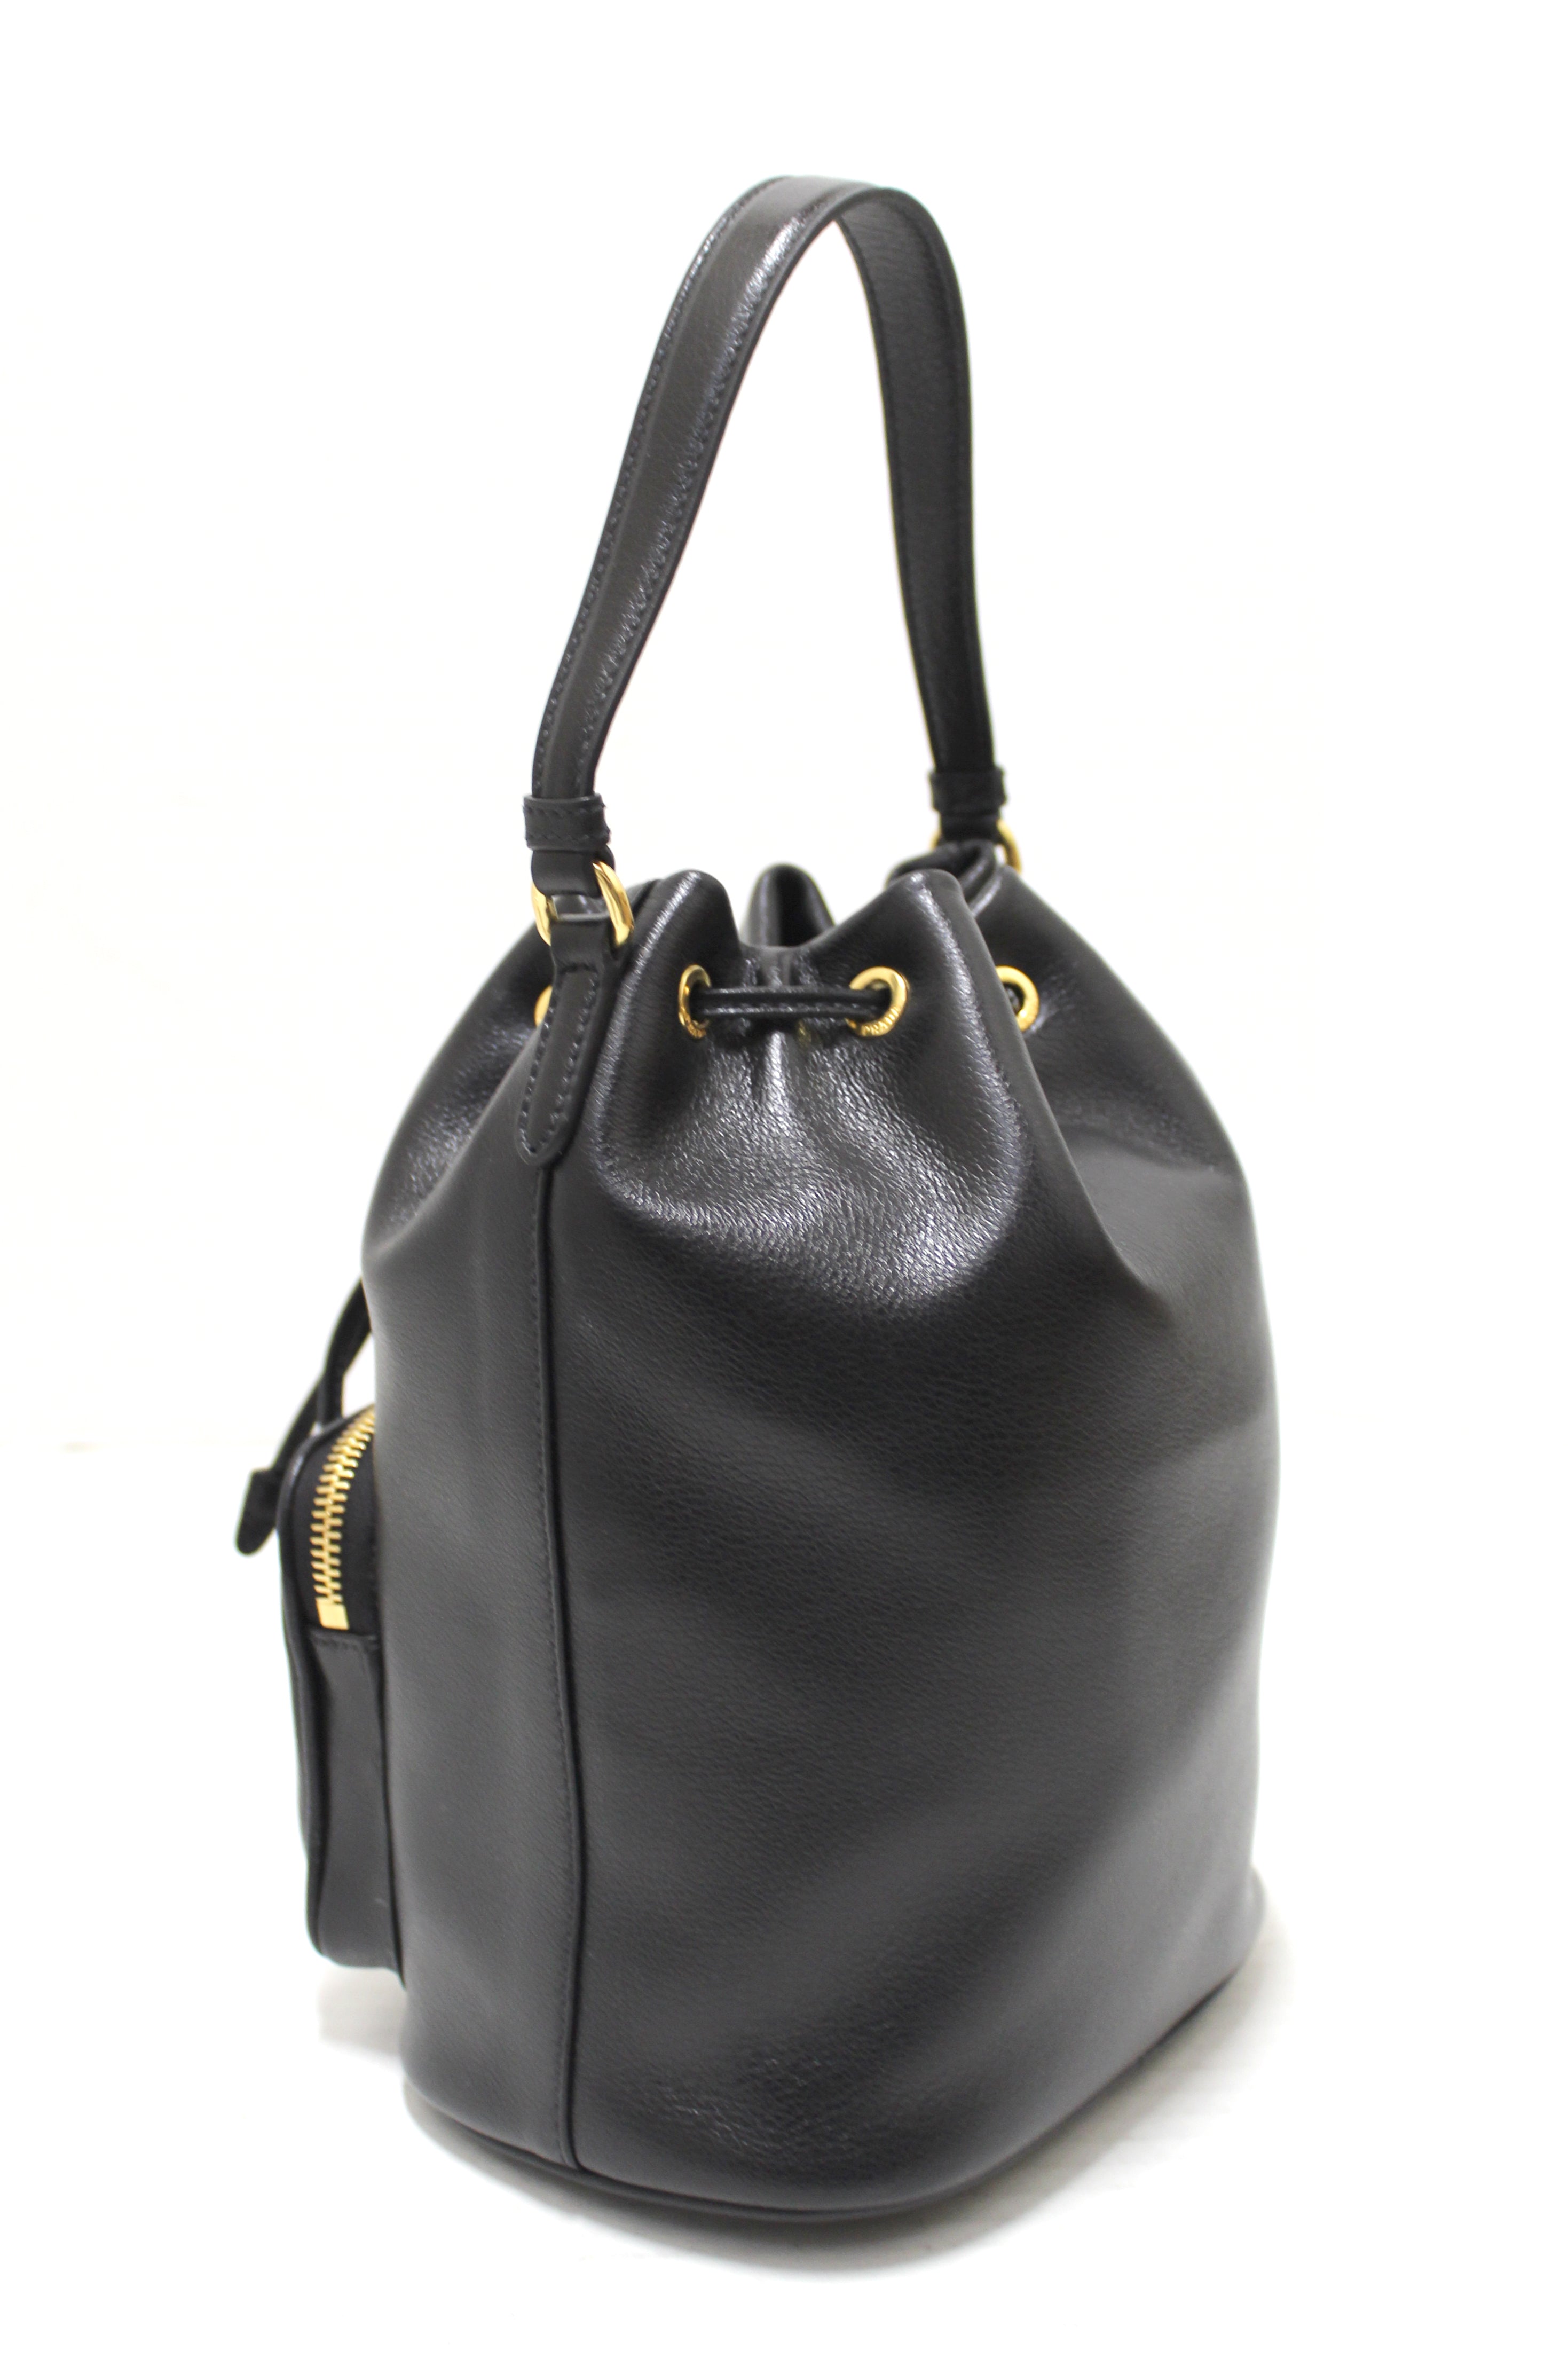 Prada Leather Bucket Bag in Black